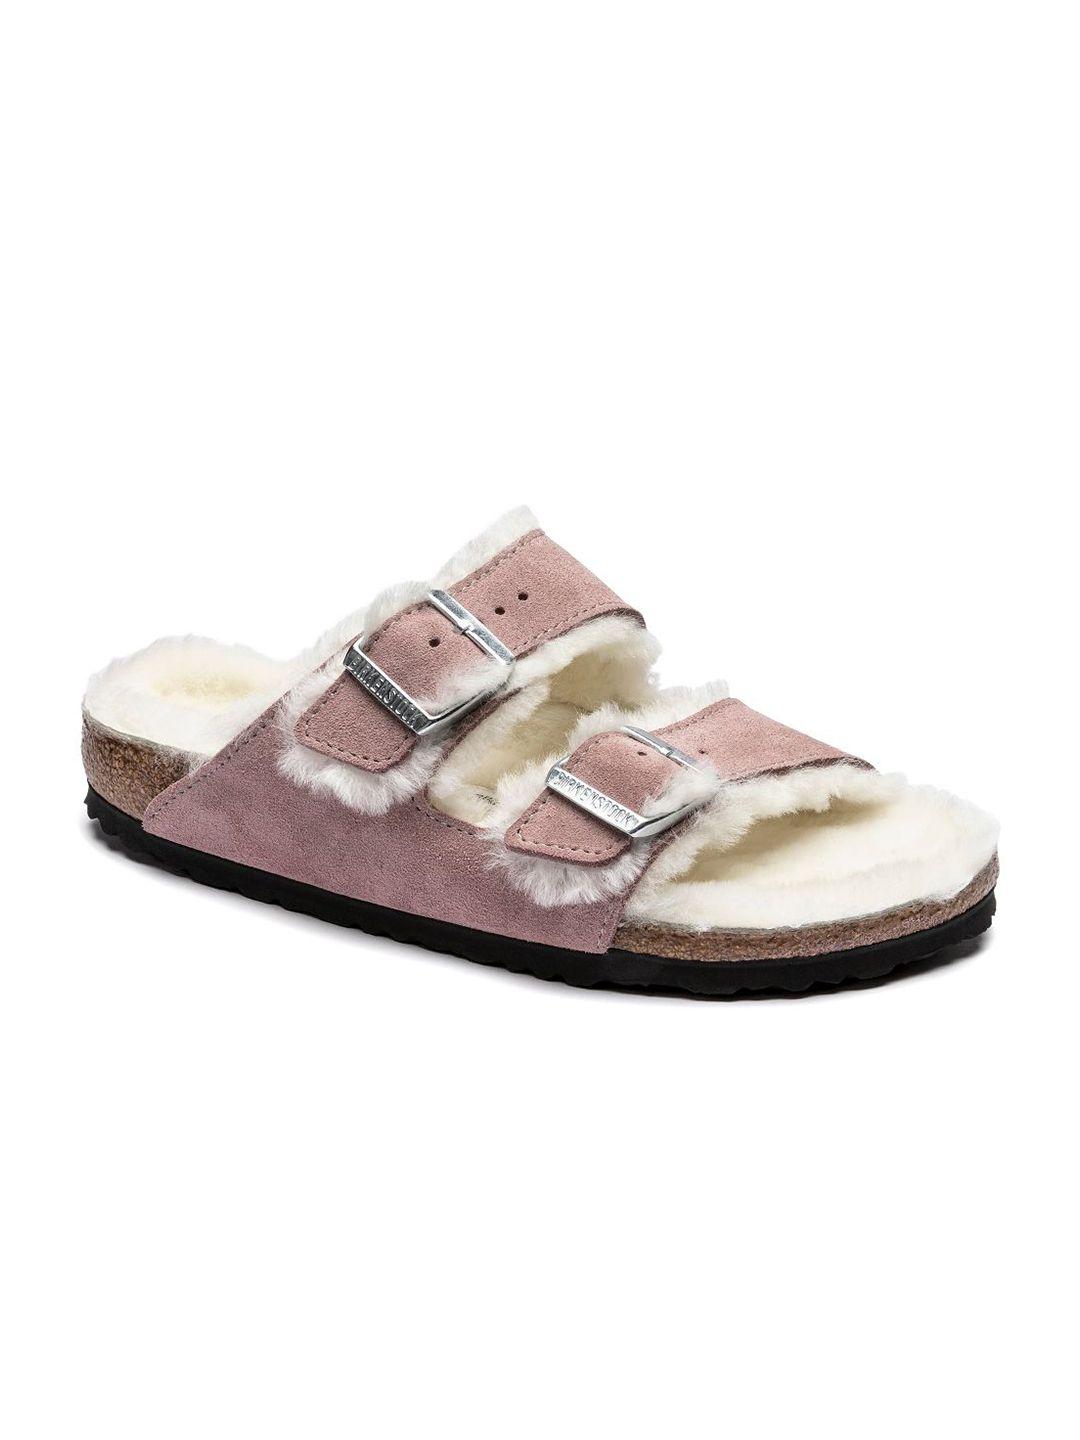 birkenstock women arizona shearling grey narrow slide sandals